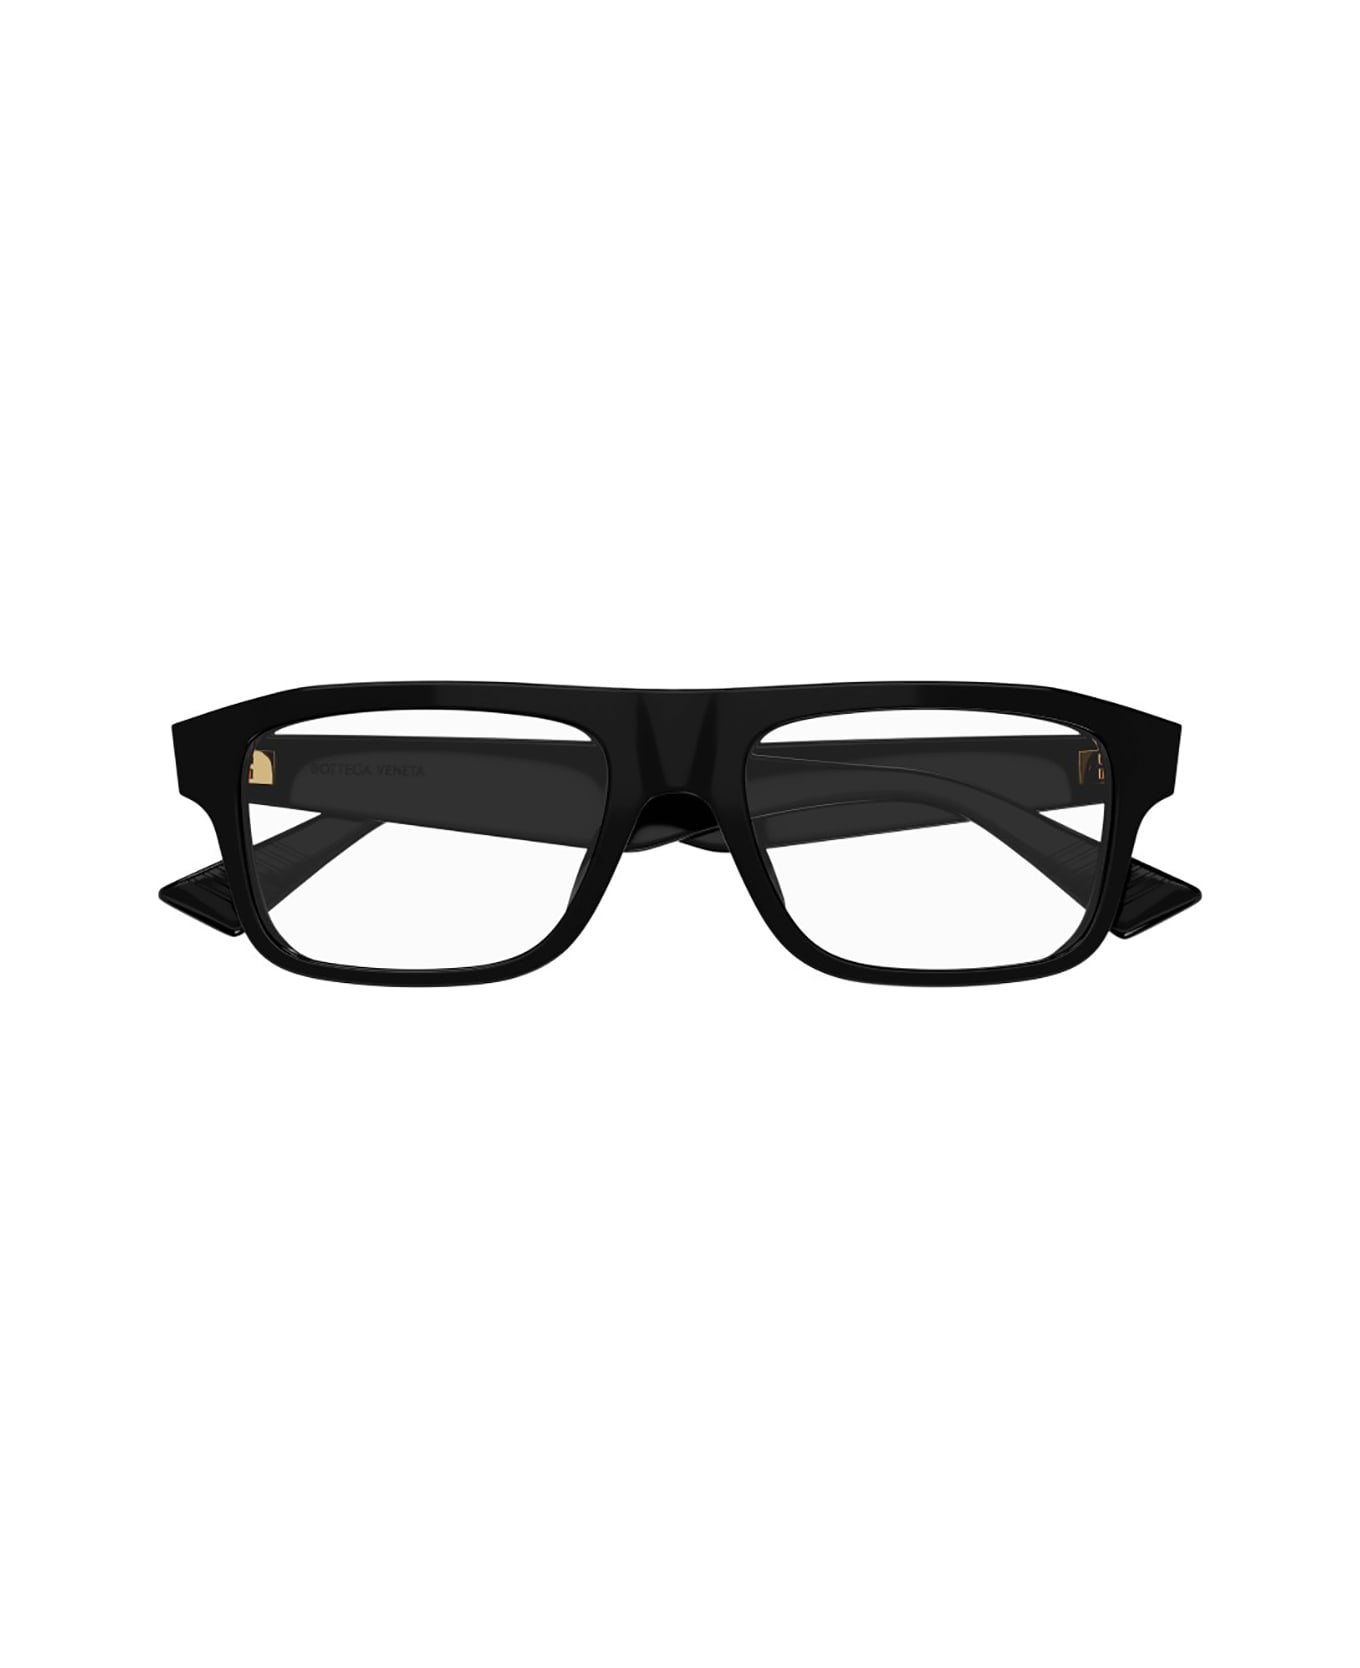 Bottega Veneta Eyewear 1c0y4cl0a Glasses - 001 black black transpare